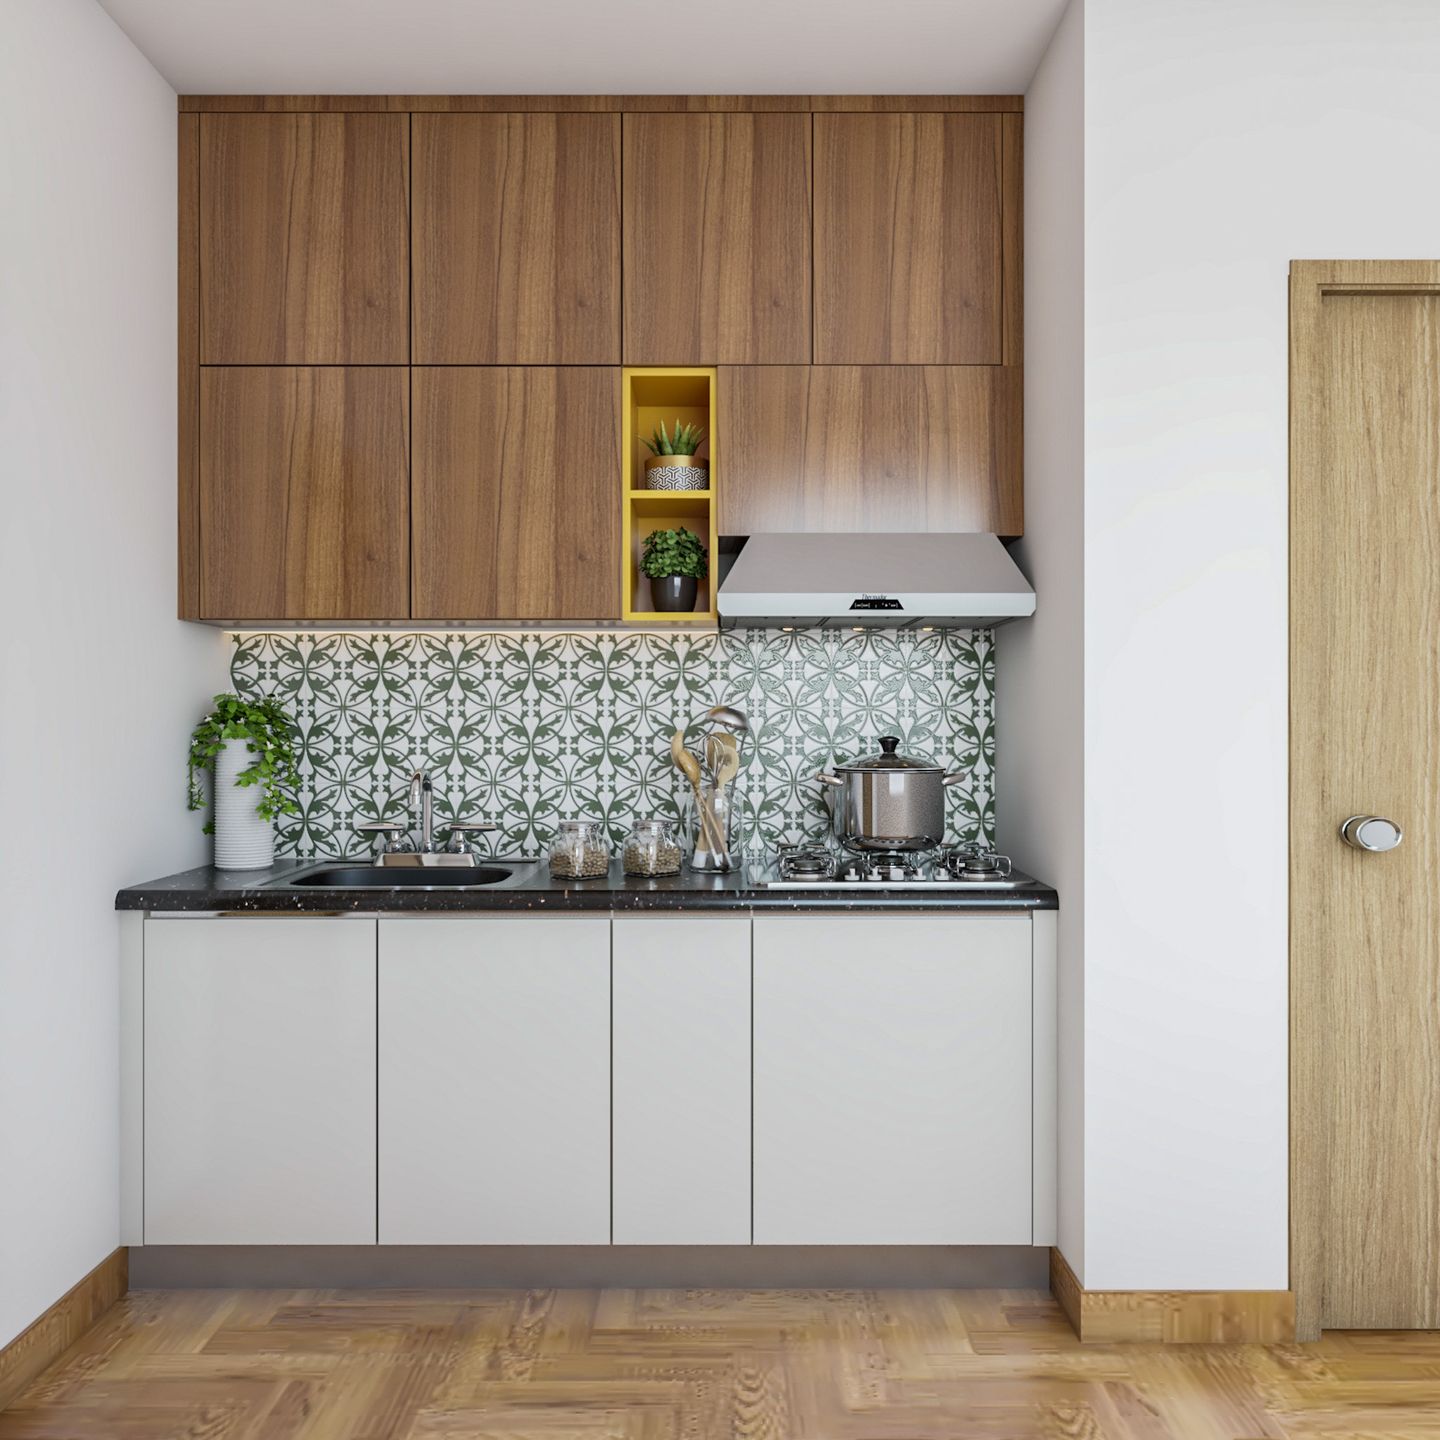 Scandinavian Kitchen Design With Yellow Shelves - Livspace